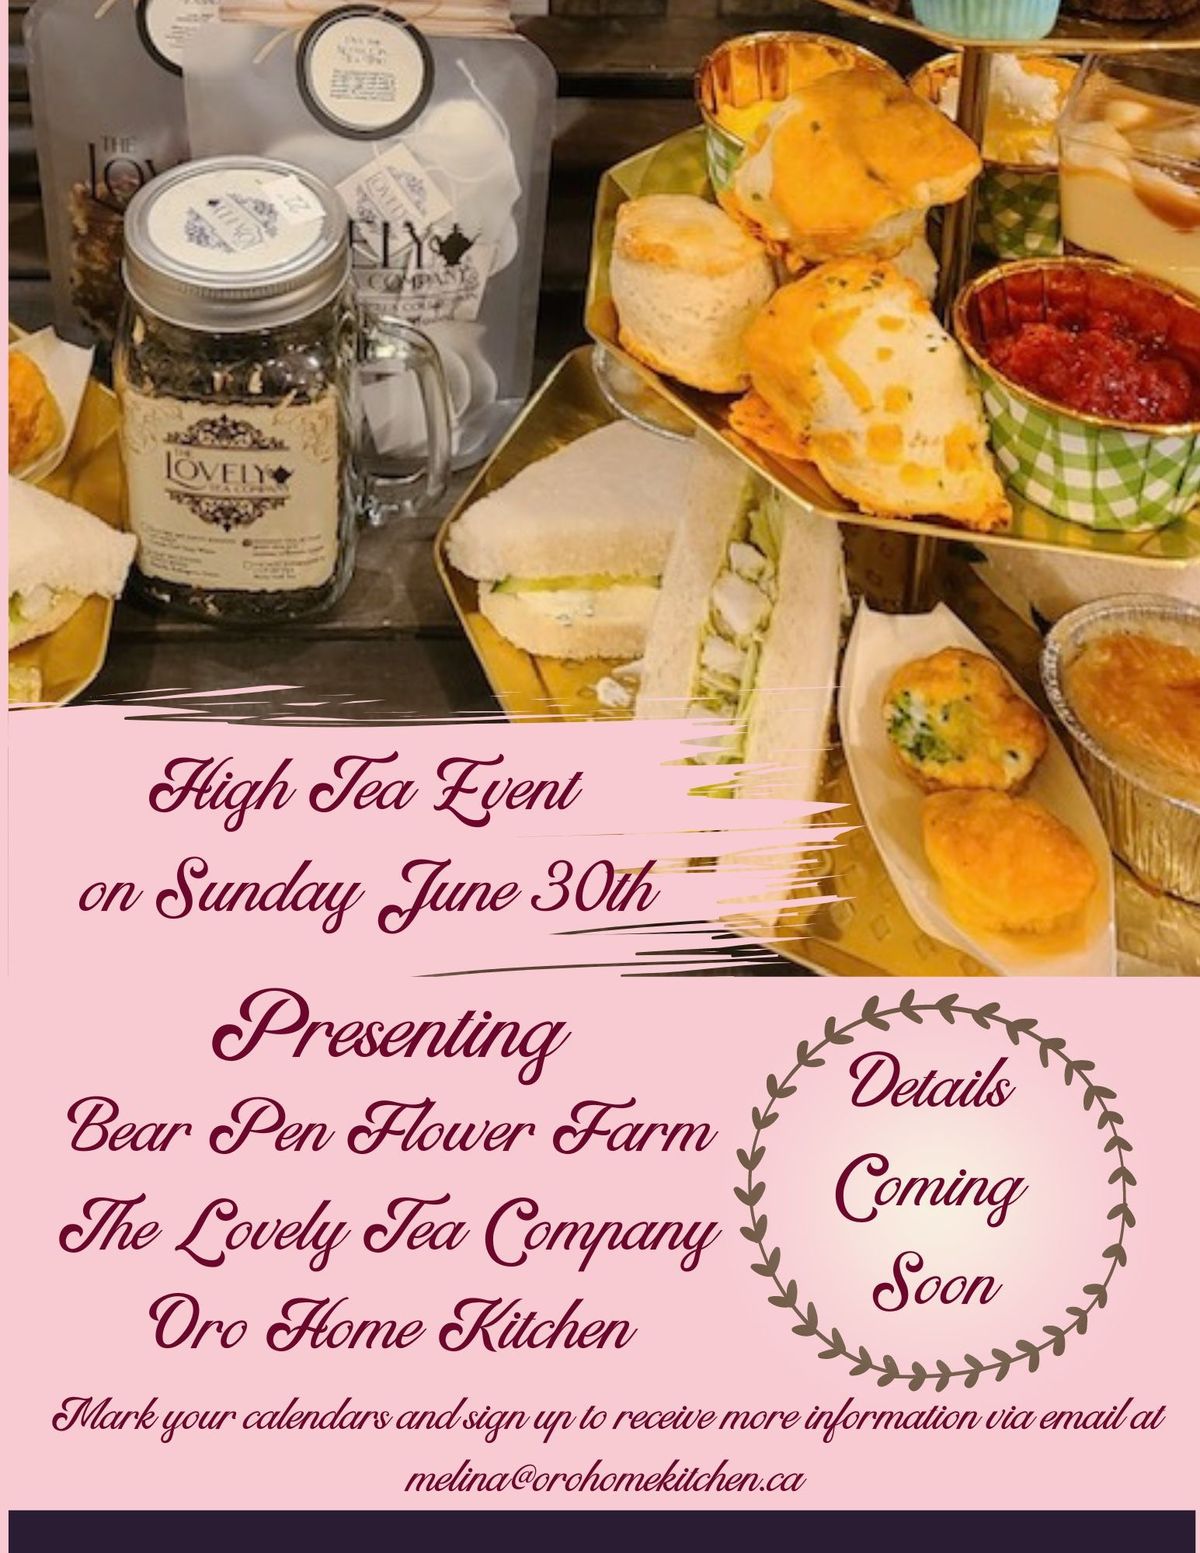 High Tea at Bear Pen Flower Farm and Oro Home Kitchen